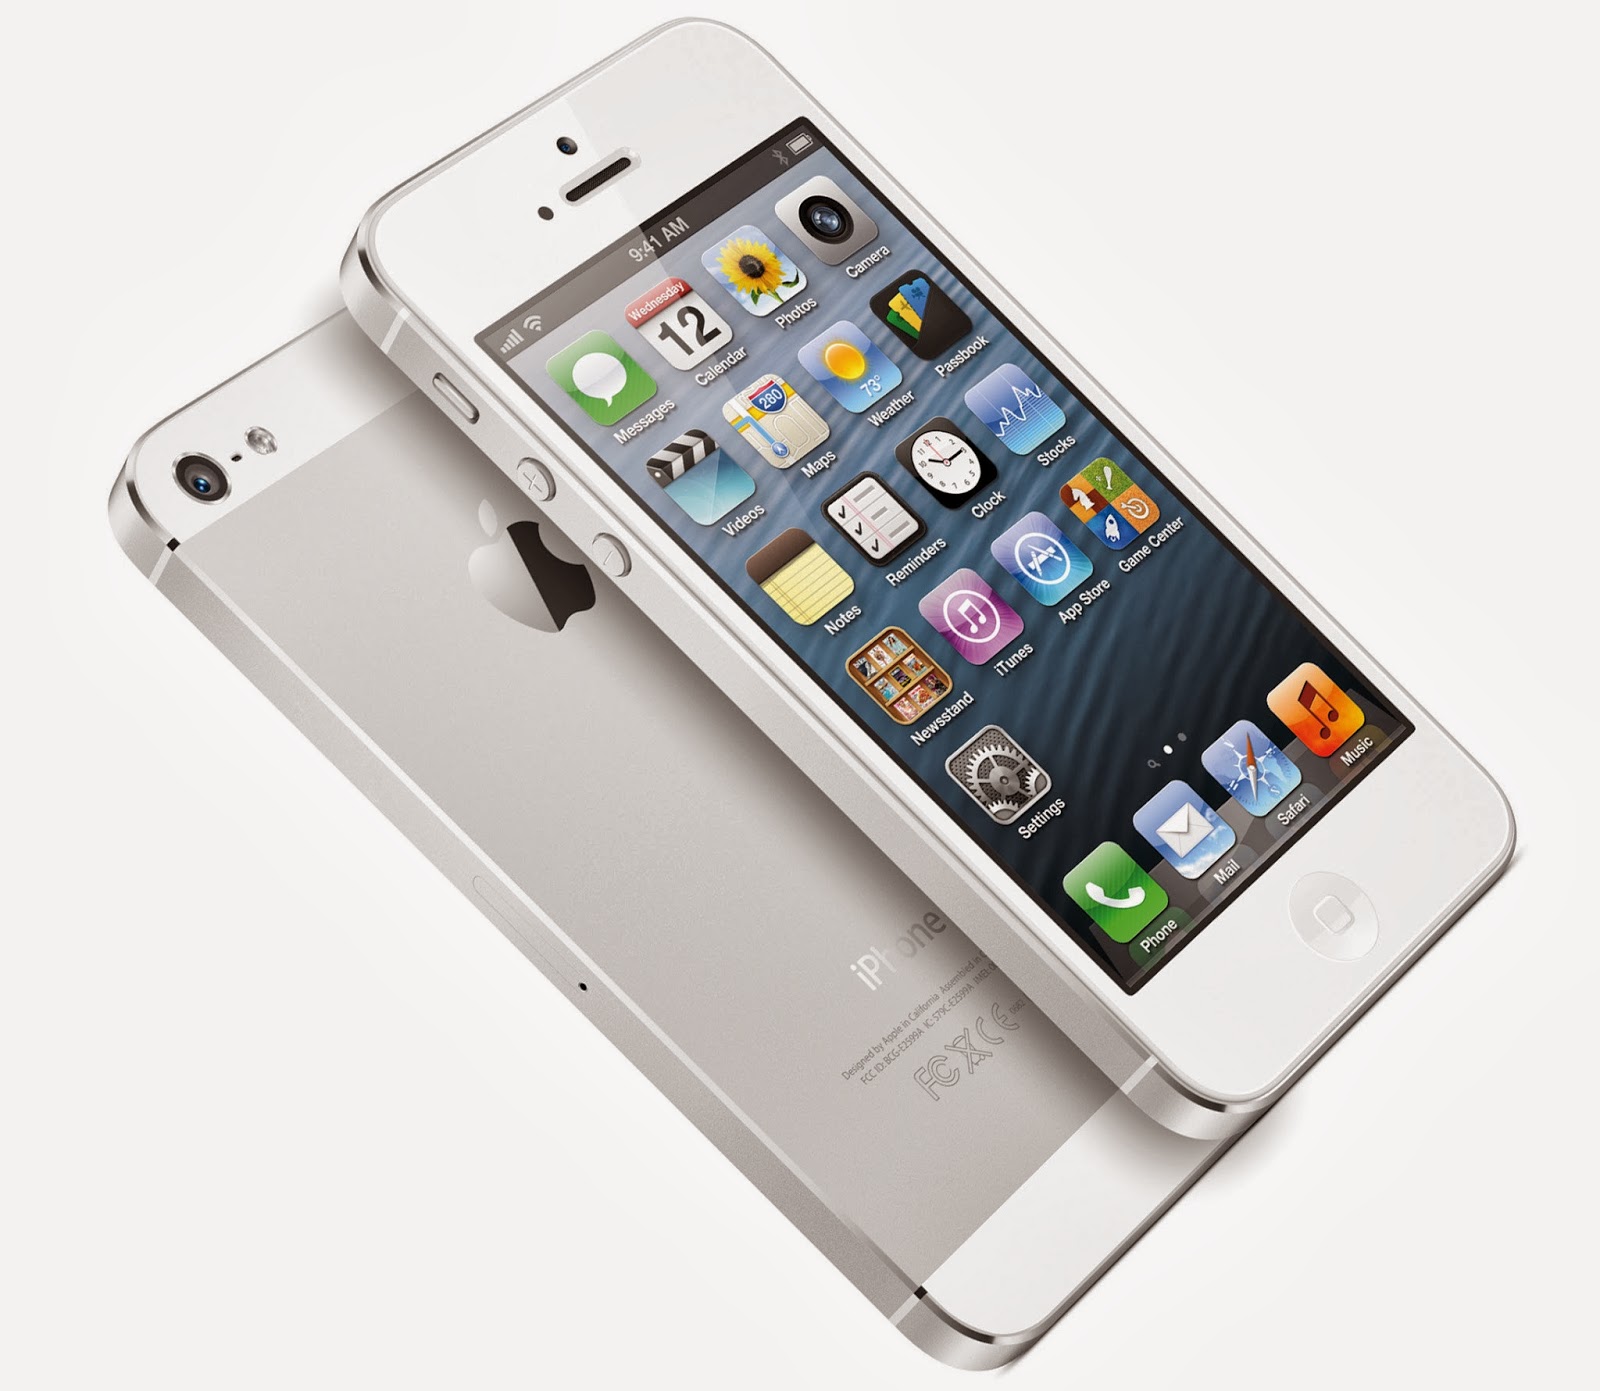 Harga iPhone 5 16GB, 32GB, 64GB - Februari 2014  Ponsel 